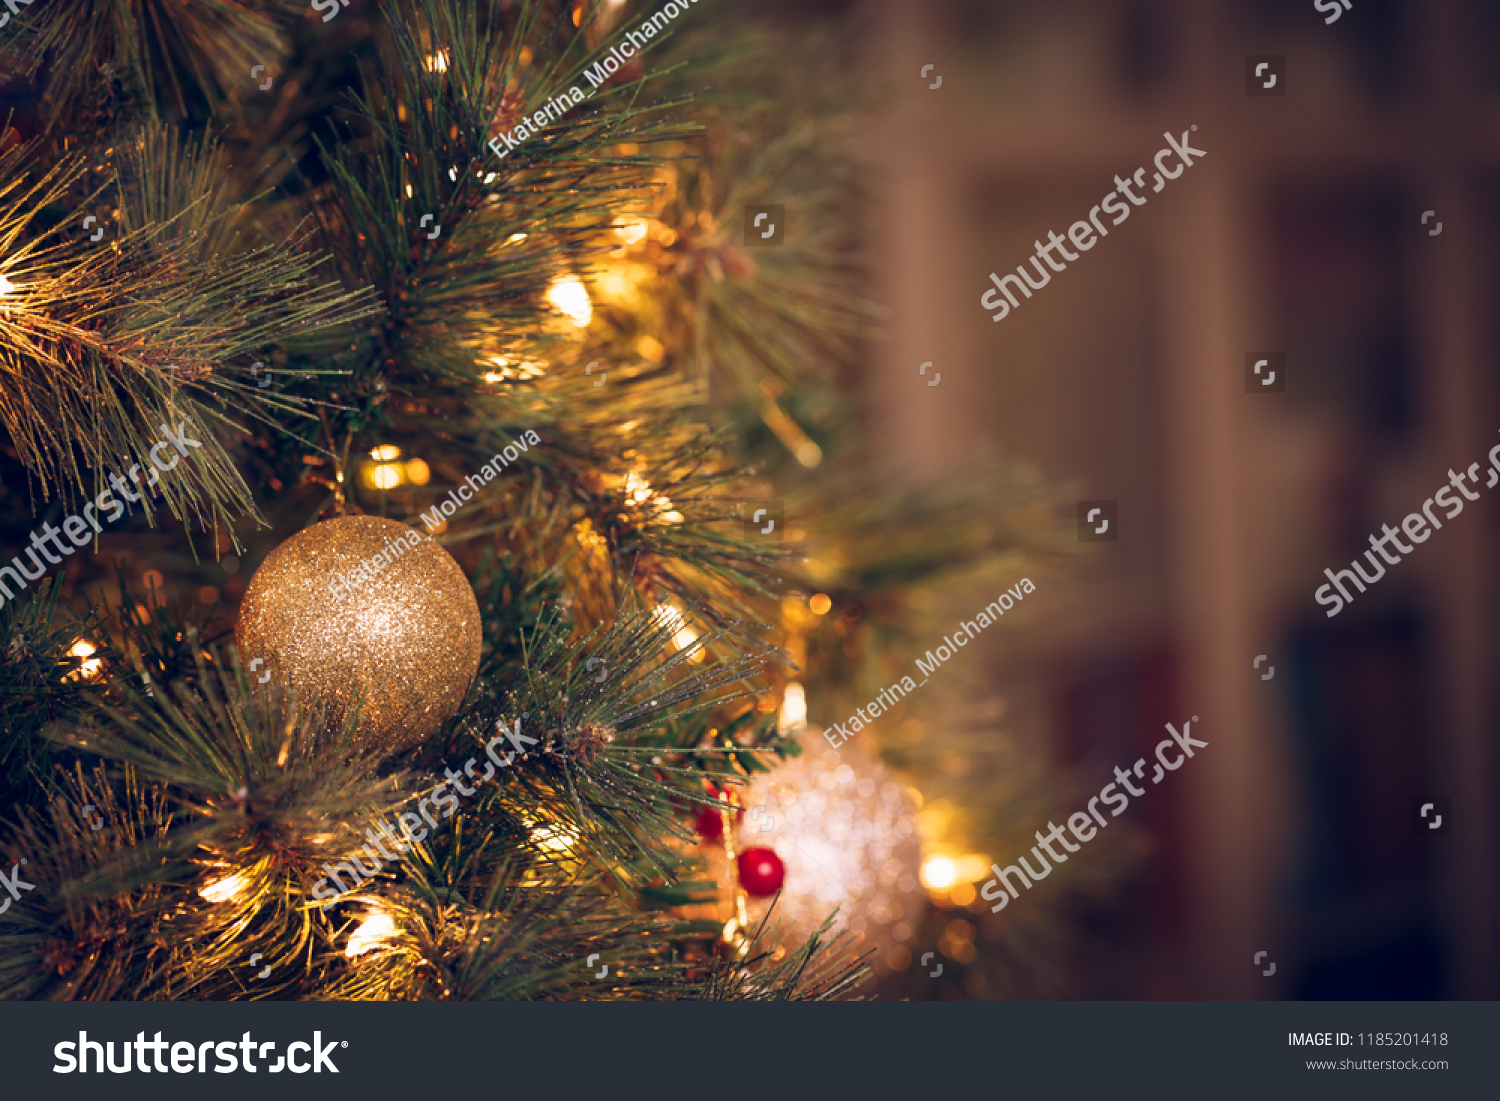 Seasonal background with Christmas toys on the tree. Celebration concept. Soft focus. Horizontal #1185201418